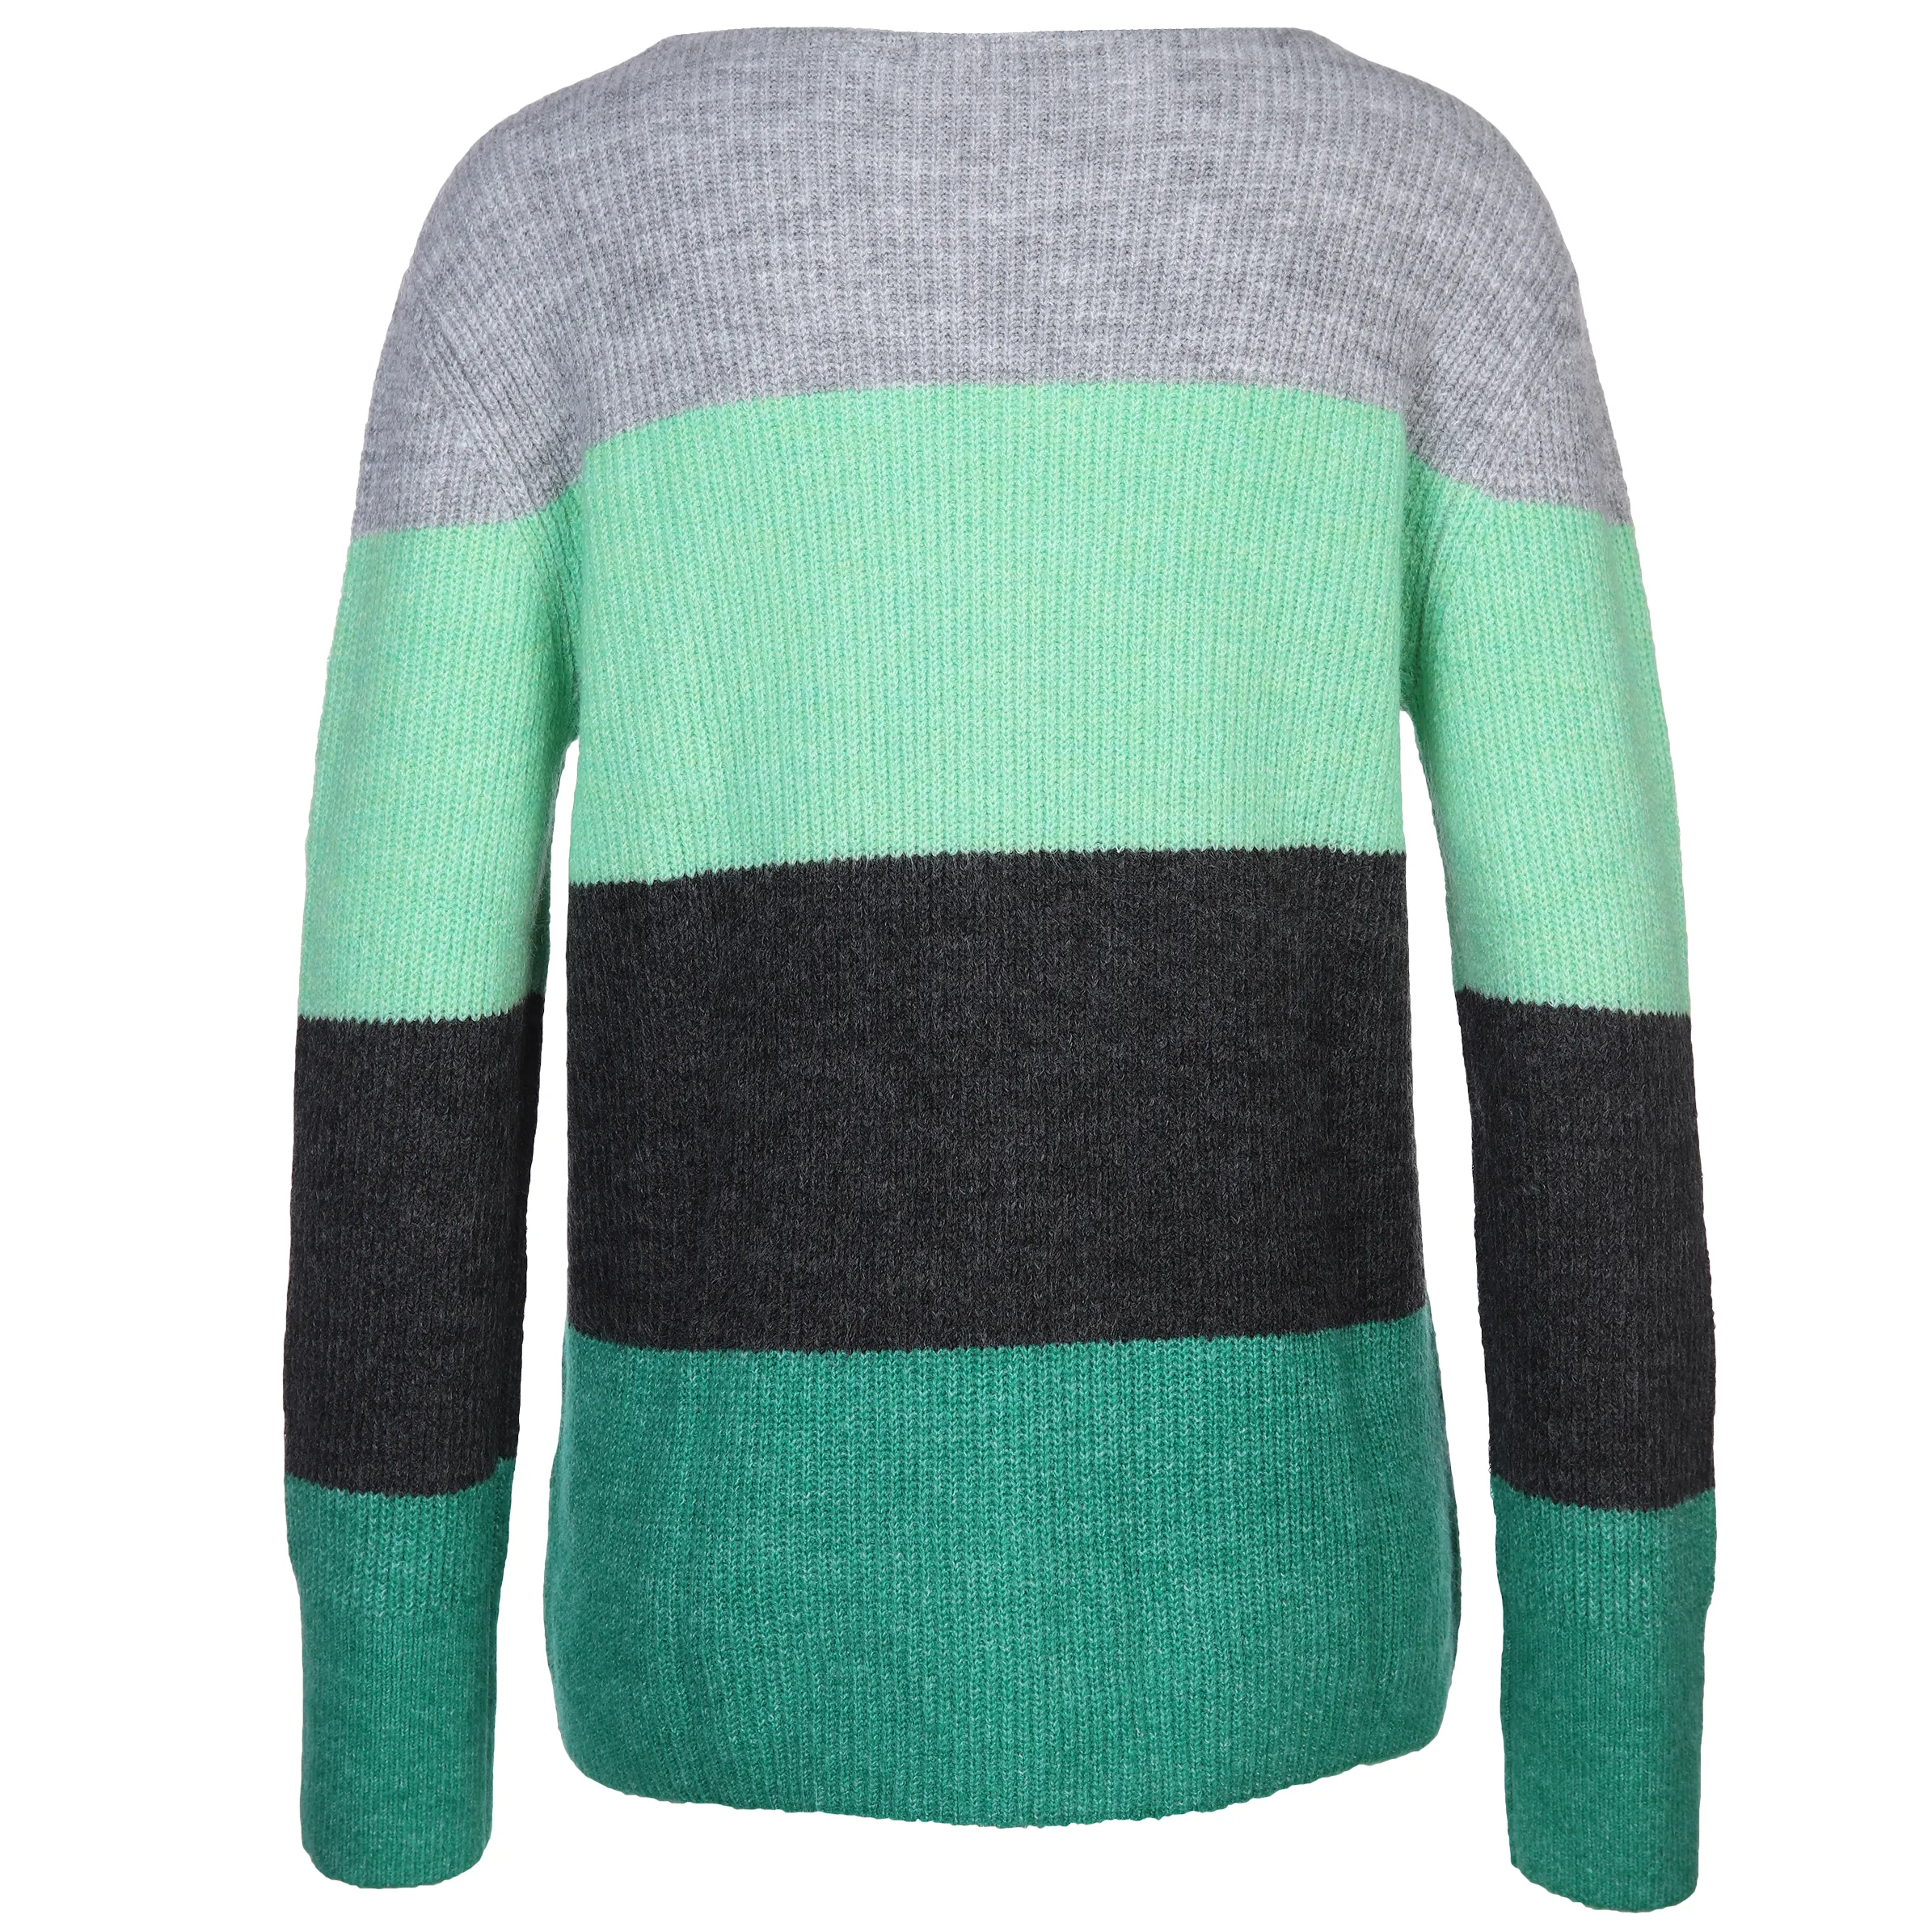 Damen Pullover im color blocking Style | GRÜN/GRAU | noSize |  880926-gruengrau